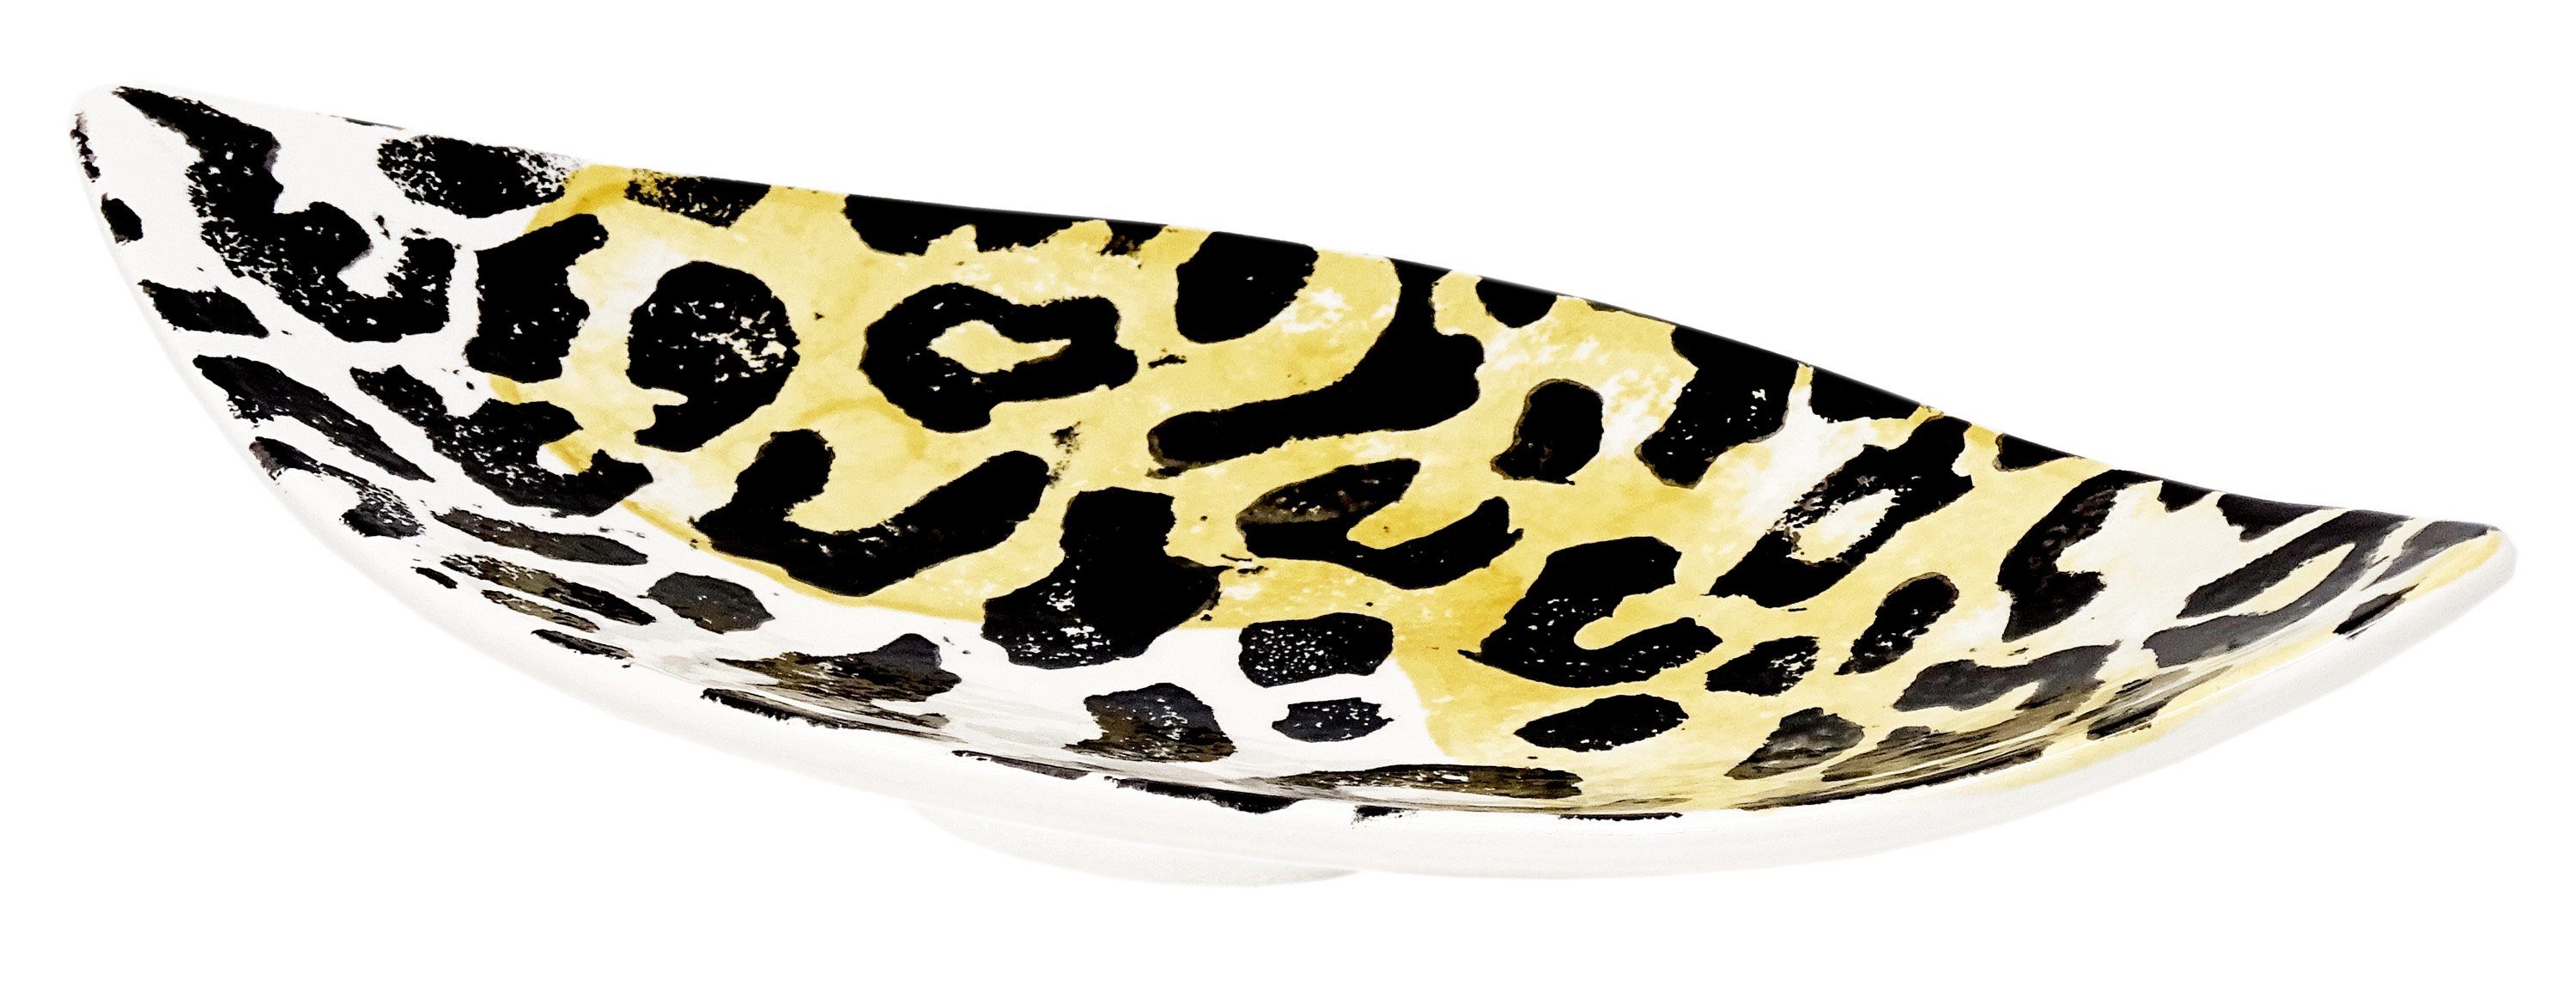 Lashuma Servierplatte Leopard, cm, 28x13 handbemalt Dessertteller Keramik, Servierschüssel ovale